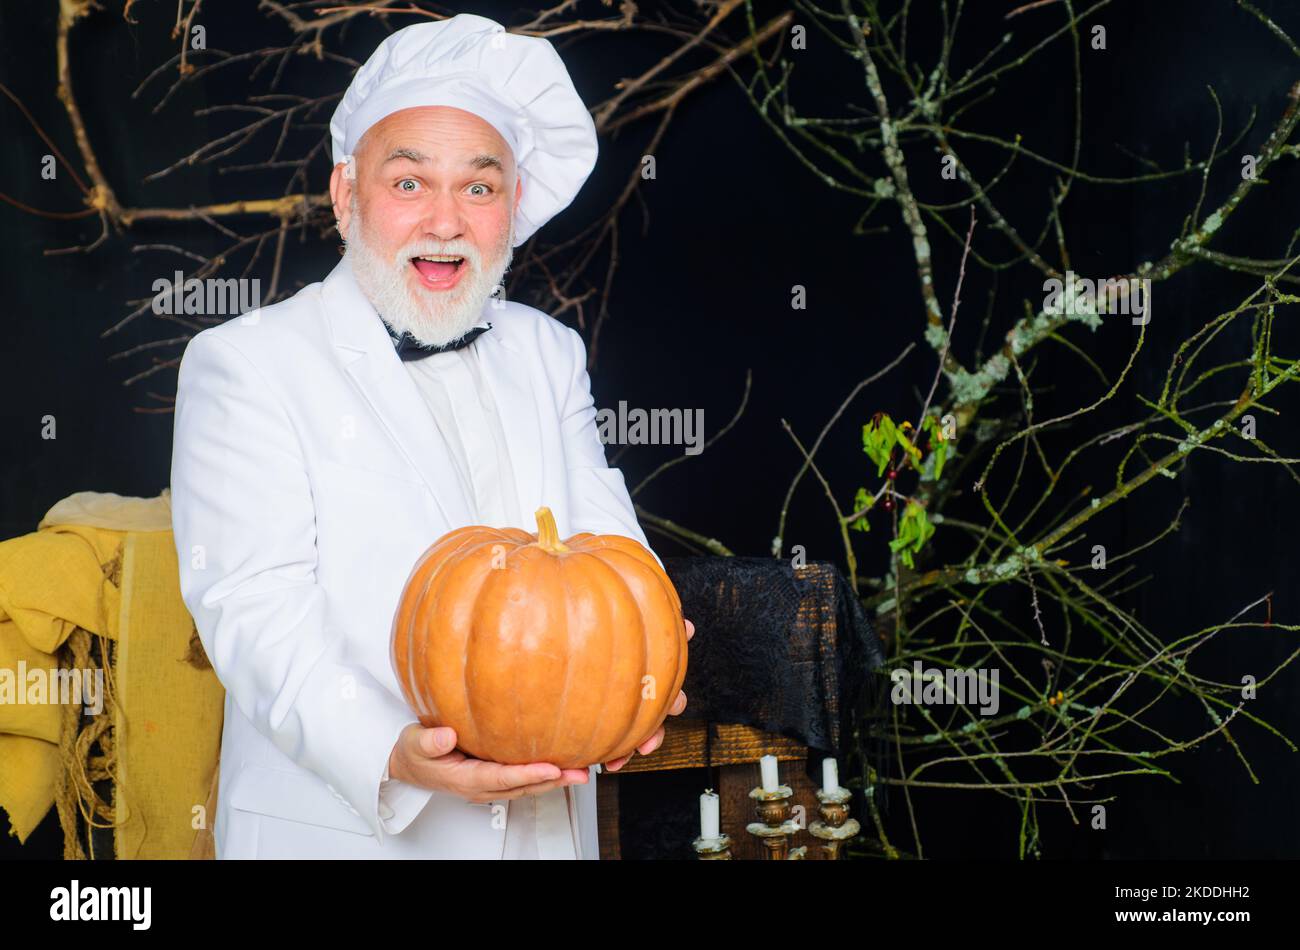 Harvest pumpkin. Bearded cook in chef hat with pumpkin. Farm market. Autumn vegetables. Diet food. Stock Photo